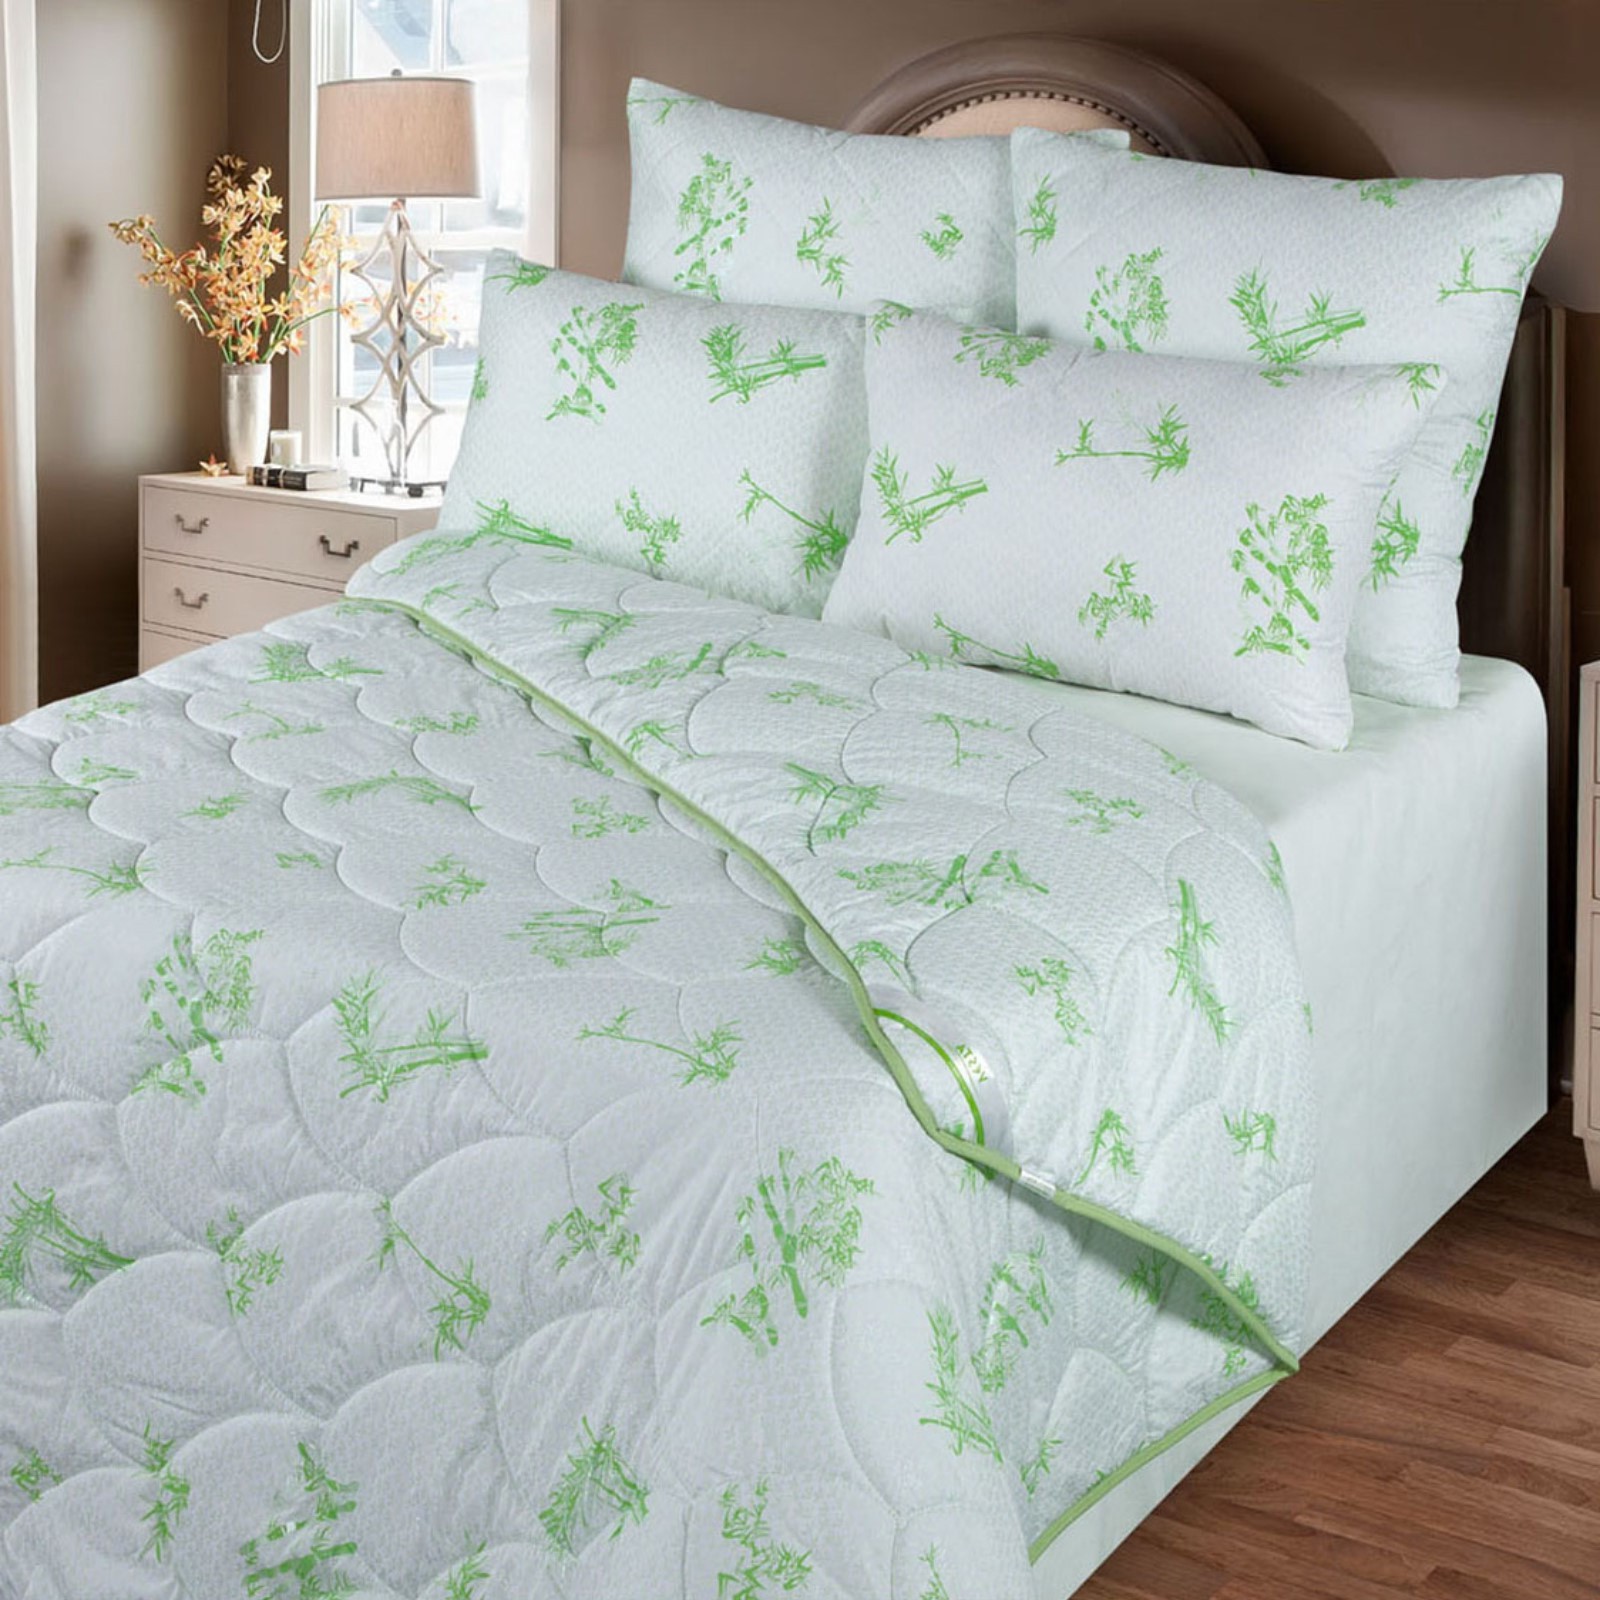 Одеяло зимнее 140х205, бамбуковое волокно, ткань глосс-сатин, полиэстер .